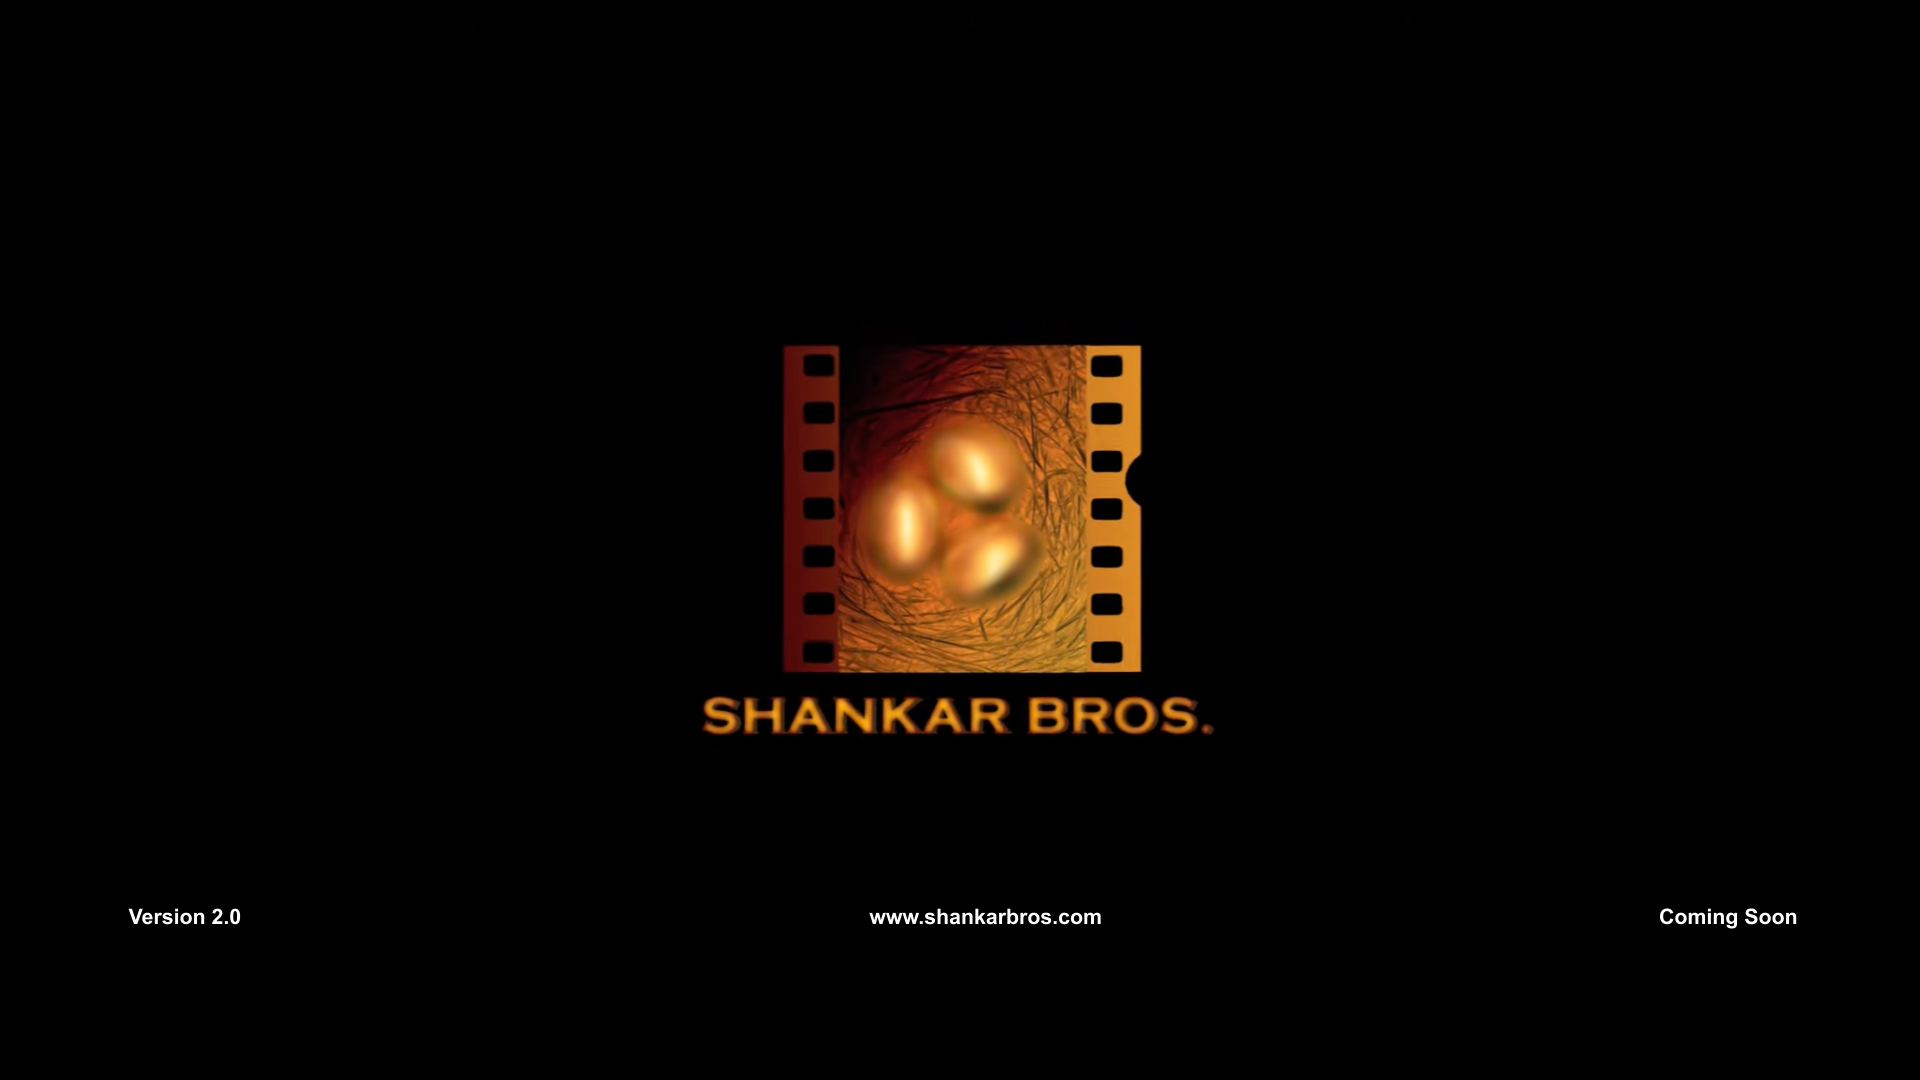 shankarbros coming soon